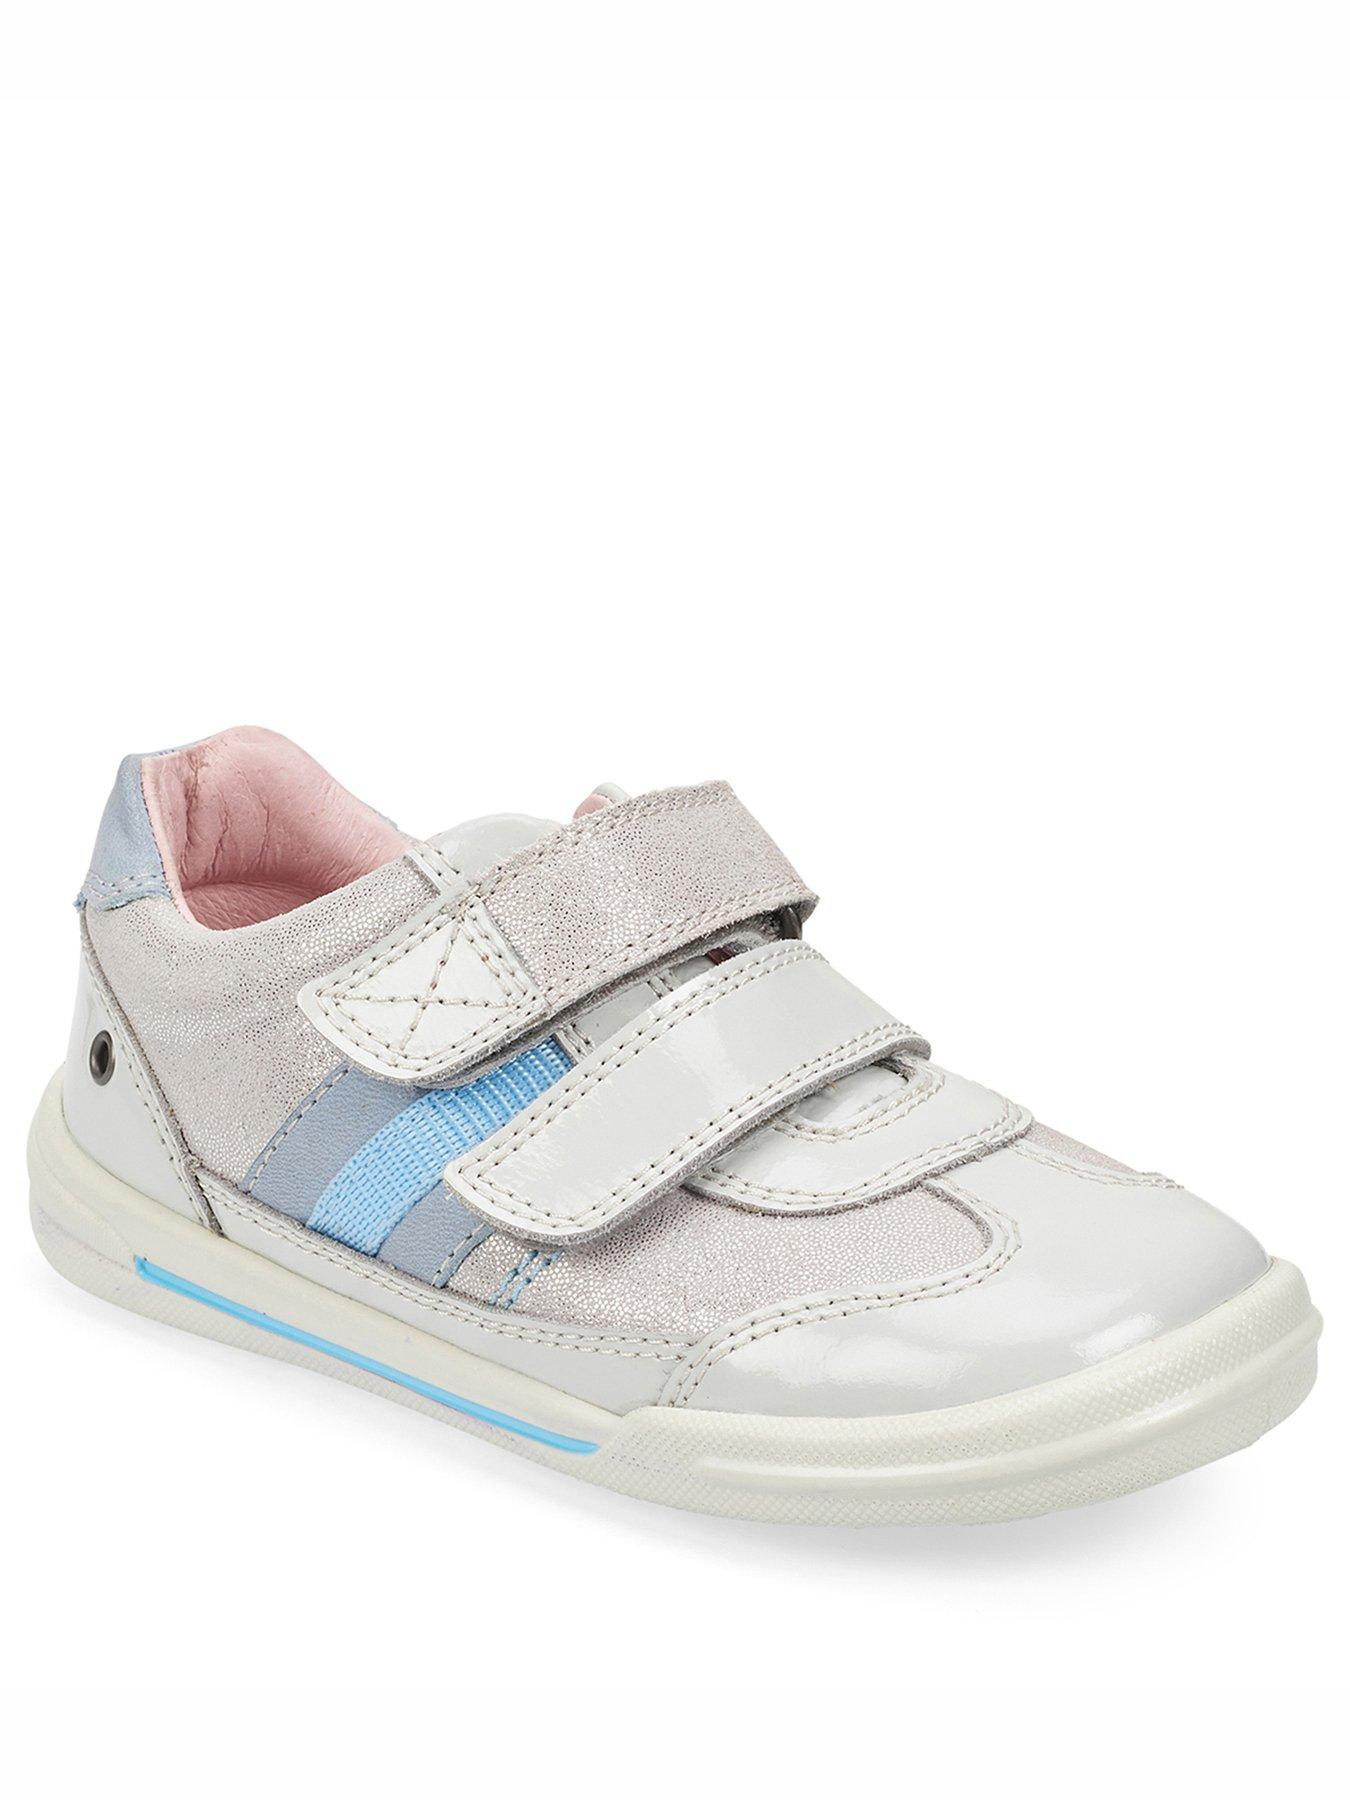  Seesaw Strap Shoe - Silver